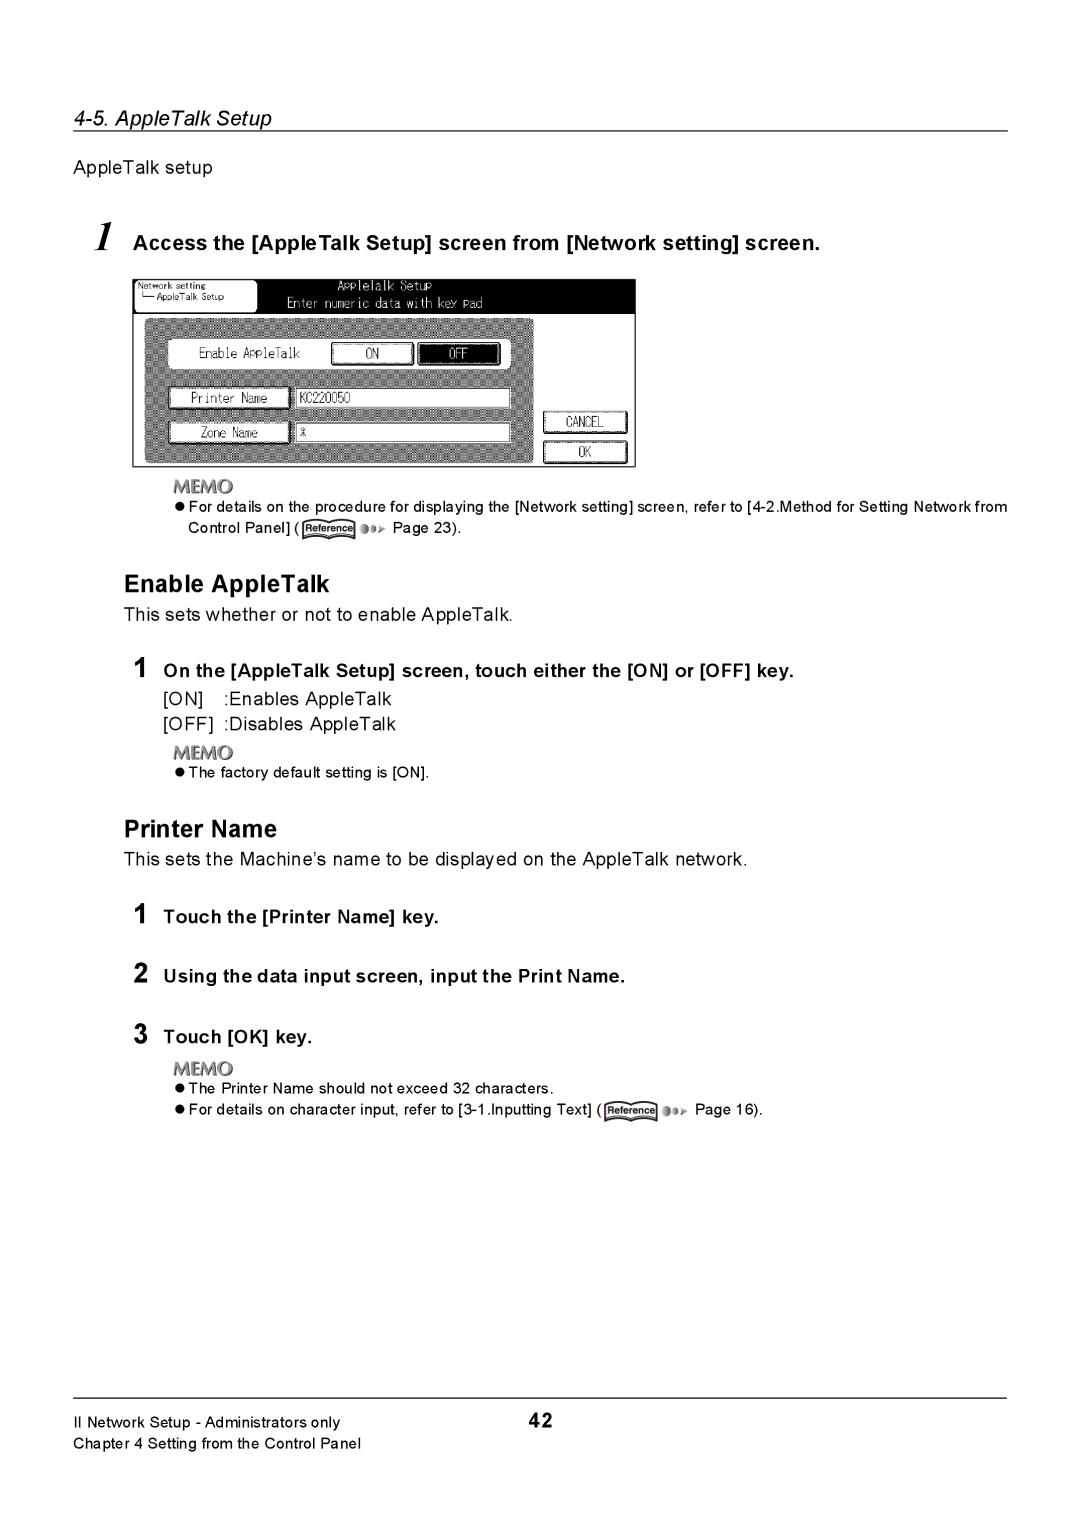 Konica Minolta Konica 7222 Enable AppleTalk, Printer Name, AppleTalk setup, This sets whether or not to enable AppleTalk 